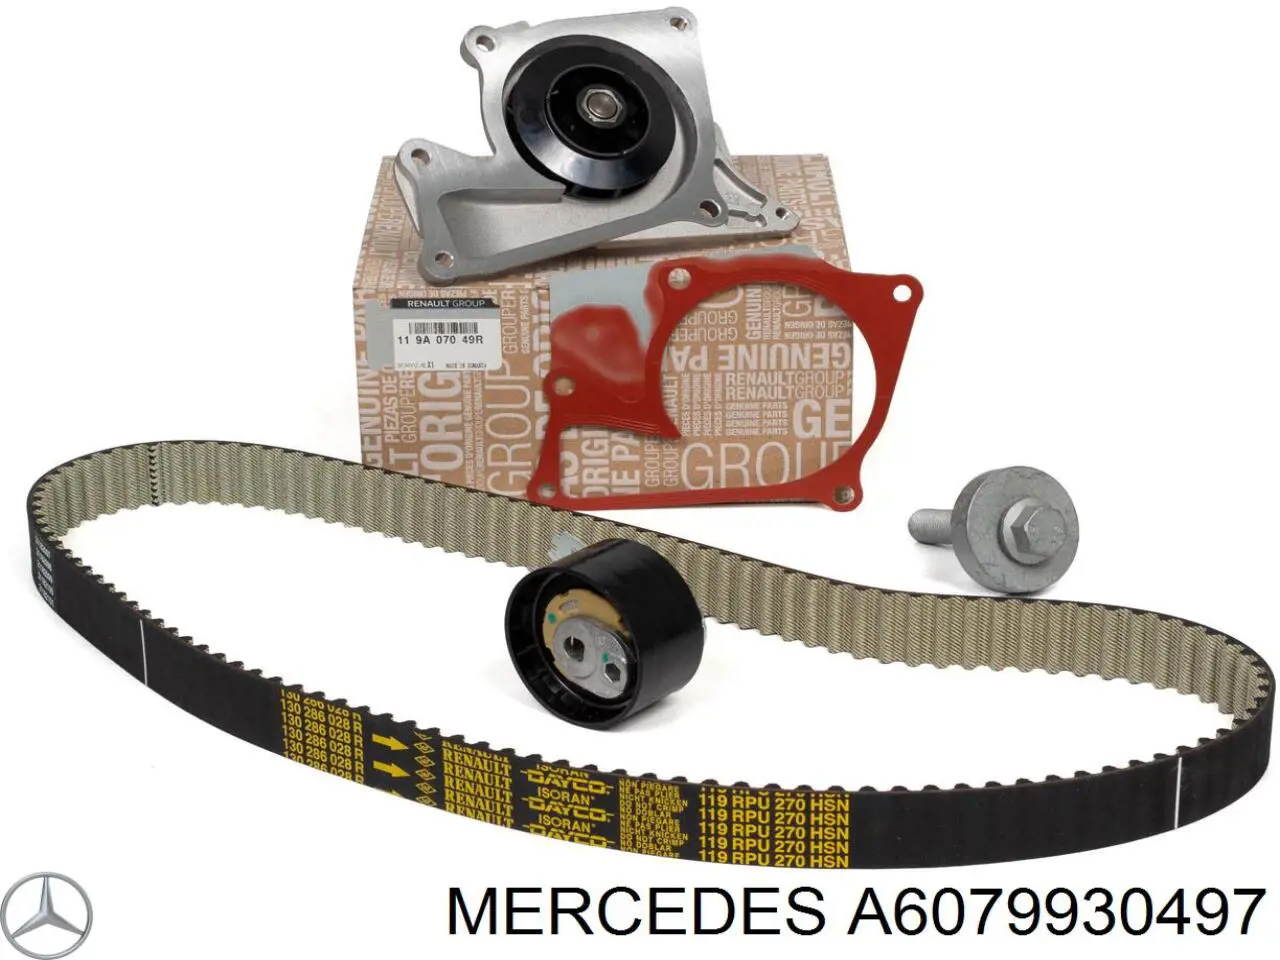 A6079930497 Mercedes ремень грм